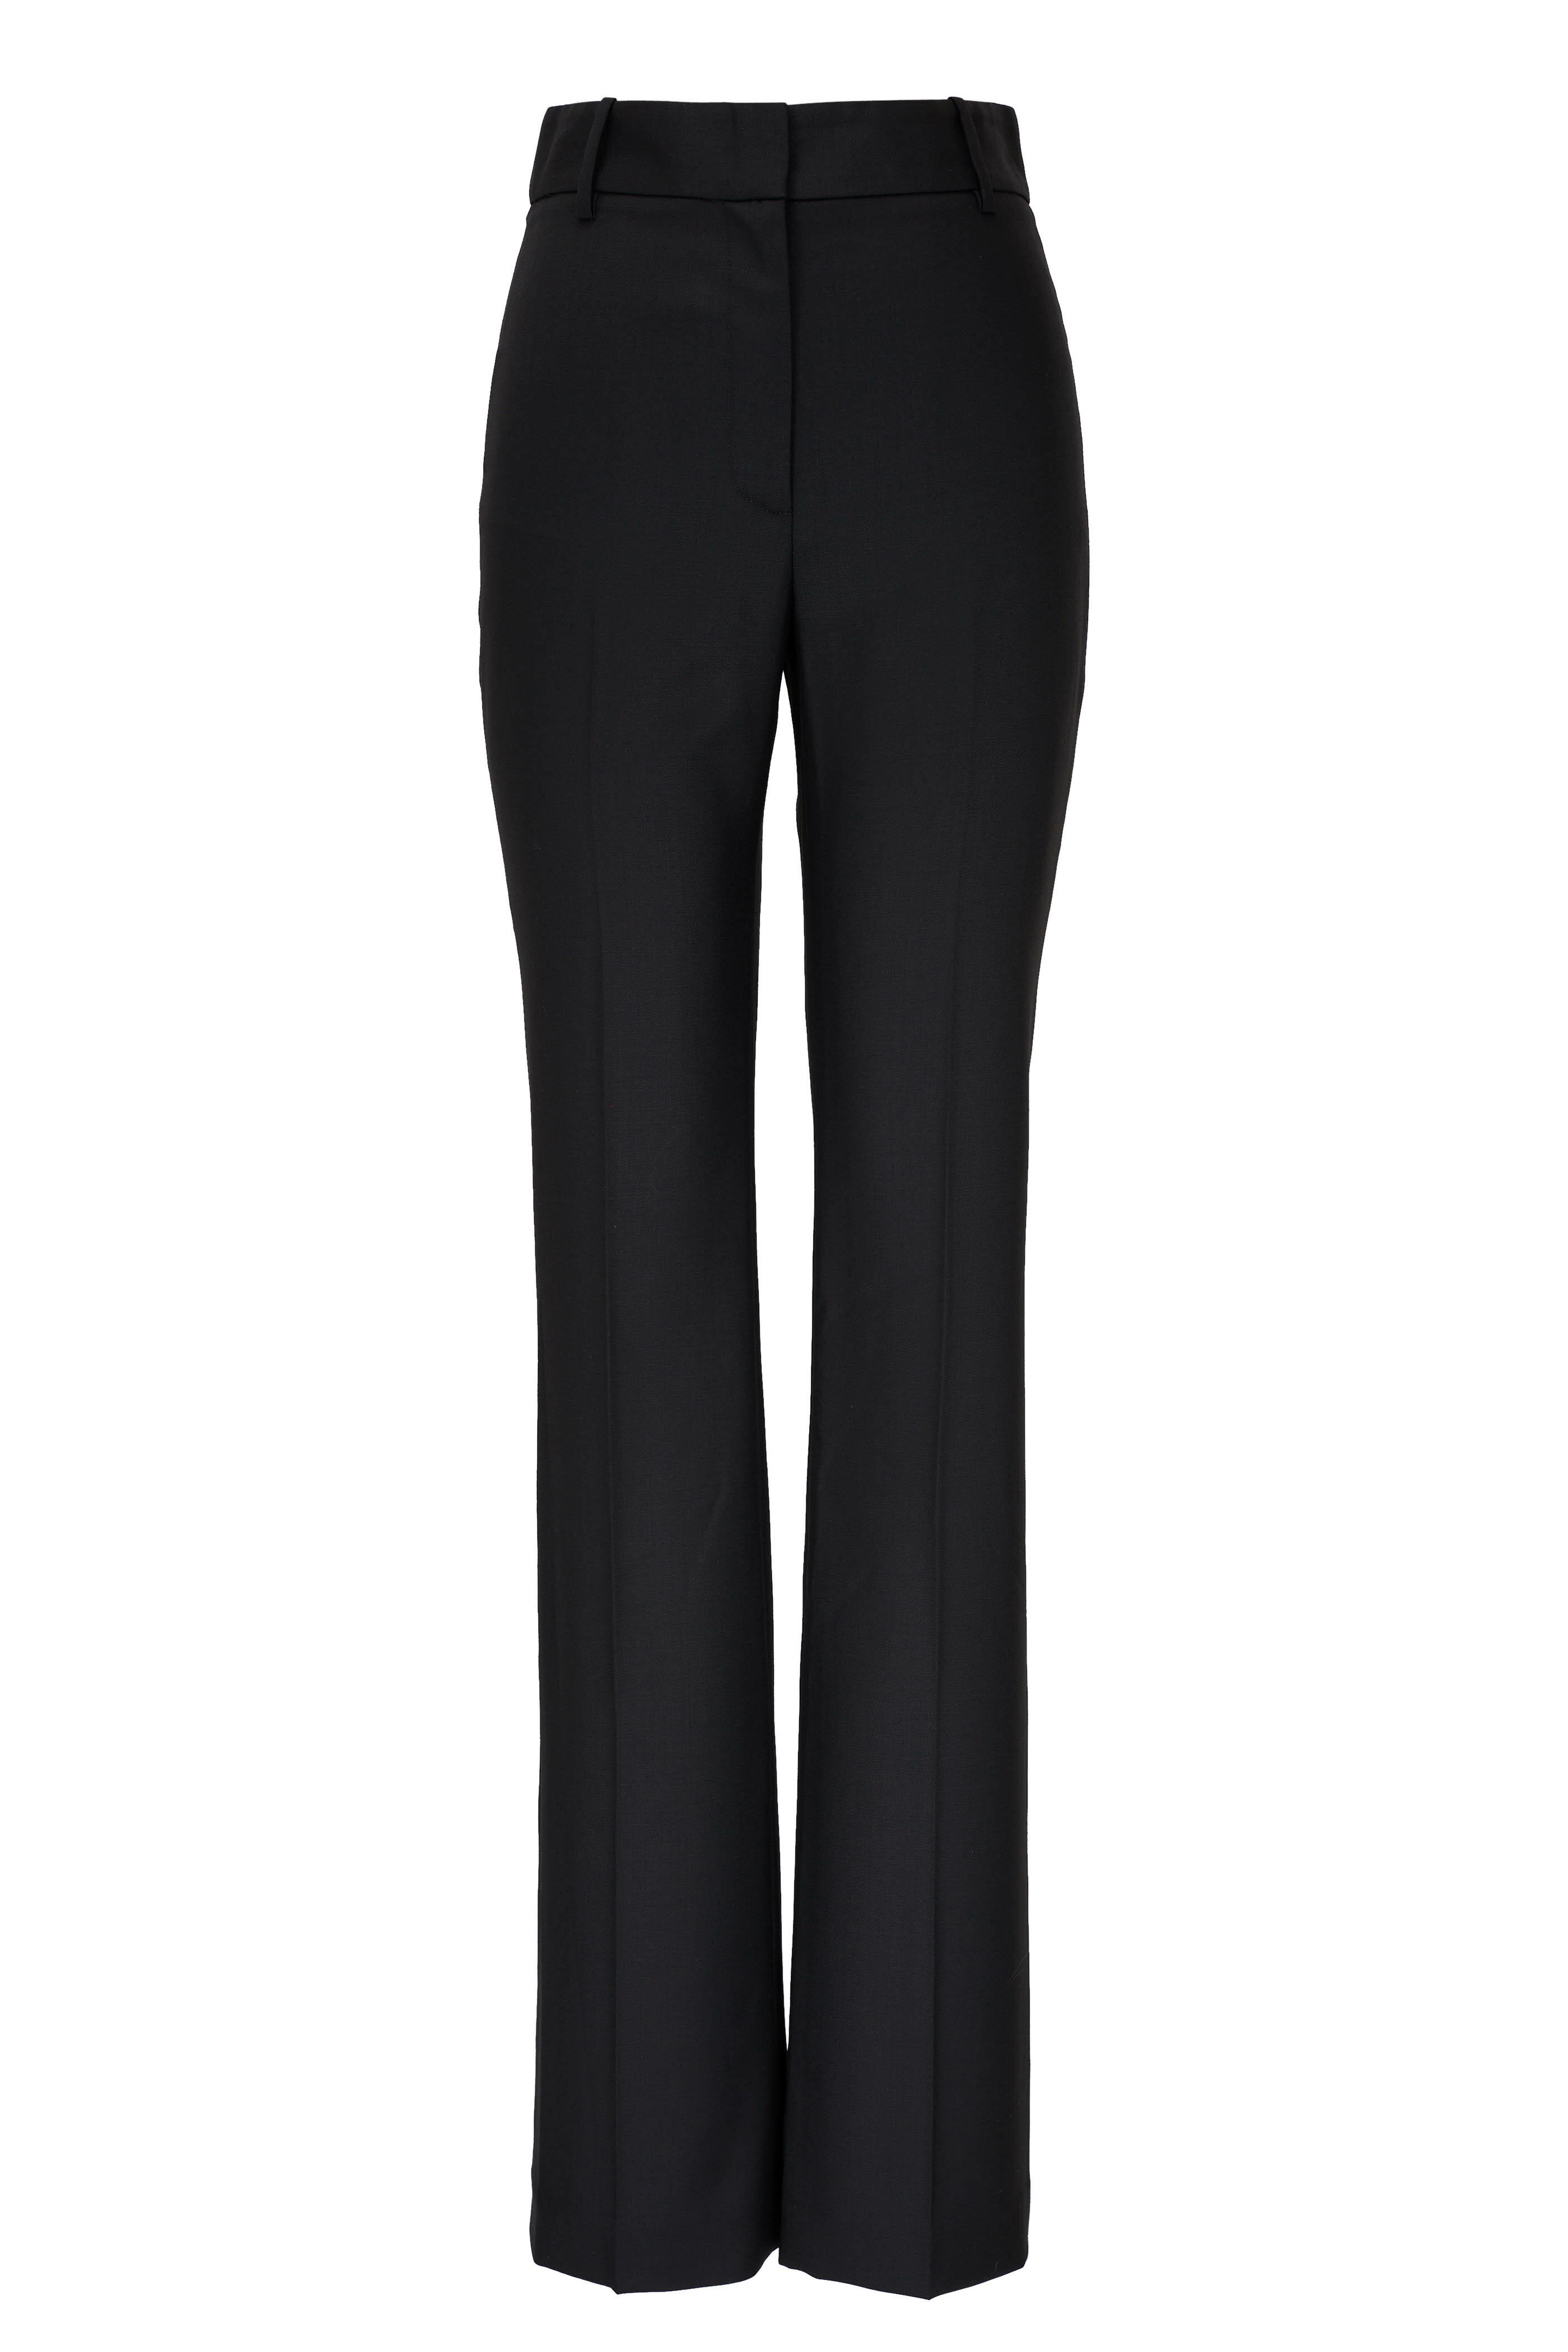 Nili Lotan - Corette Black Wool Pant | Mitchell Stores